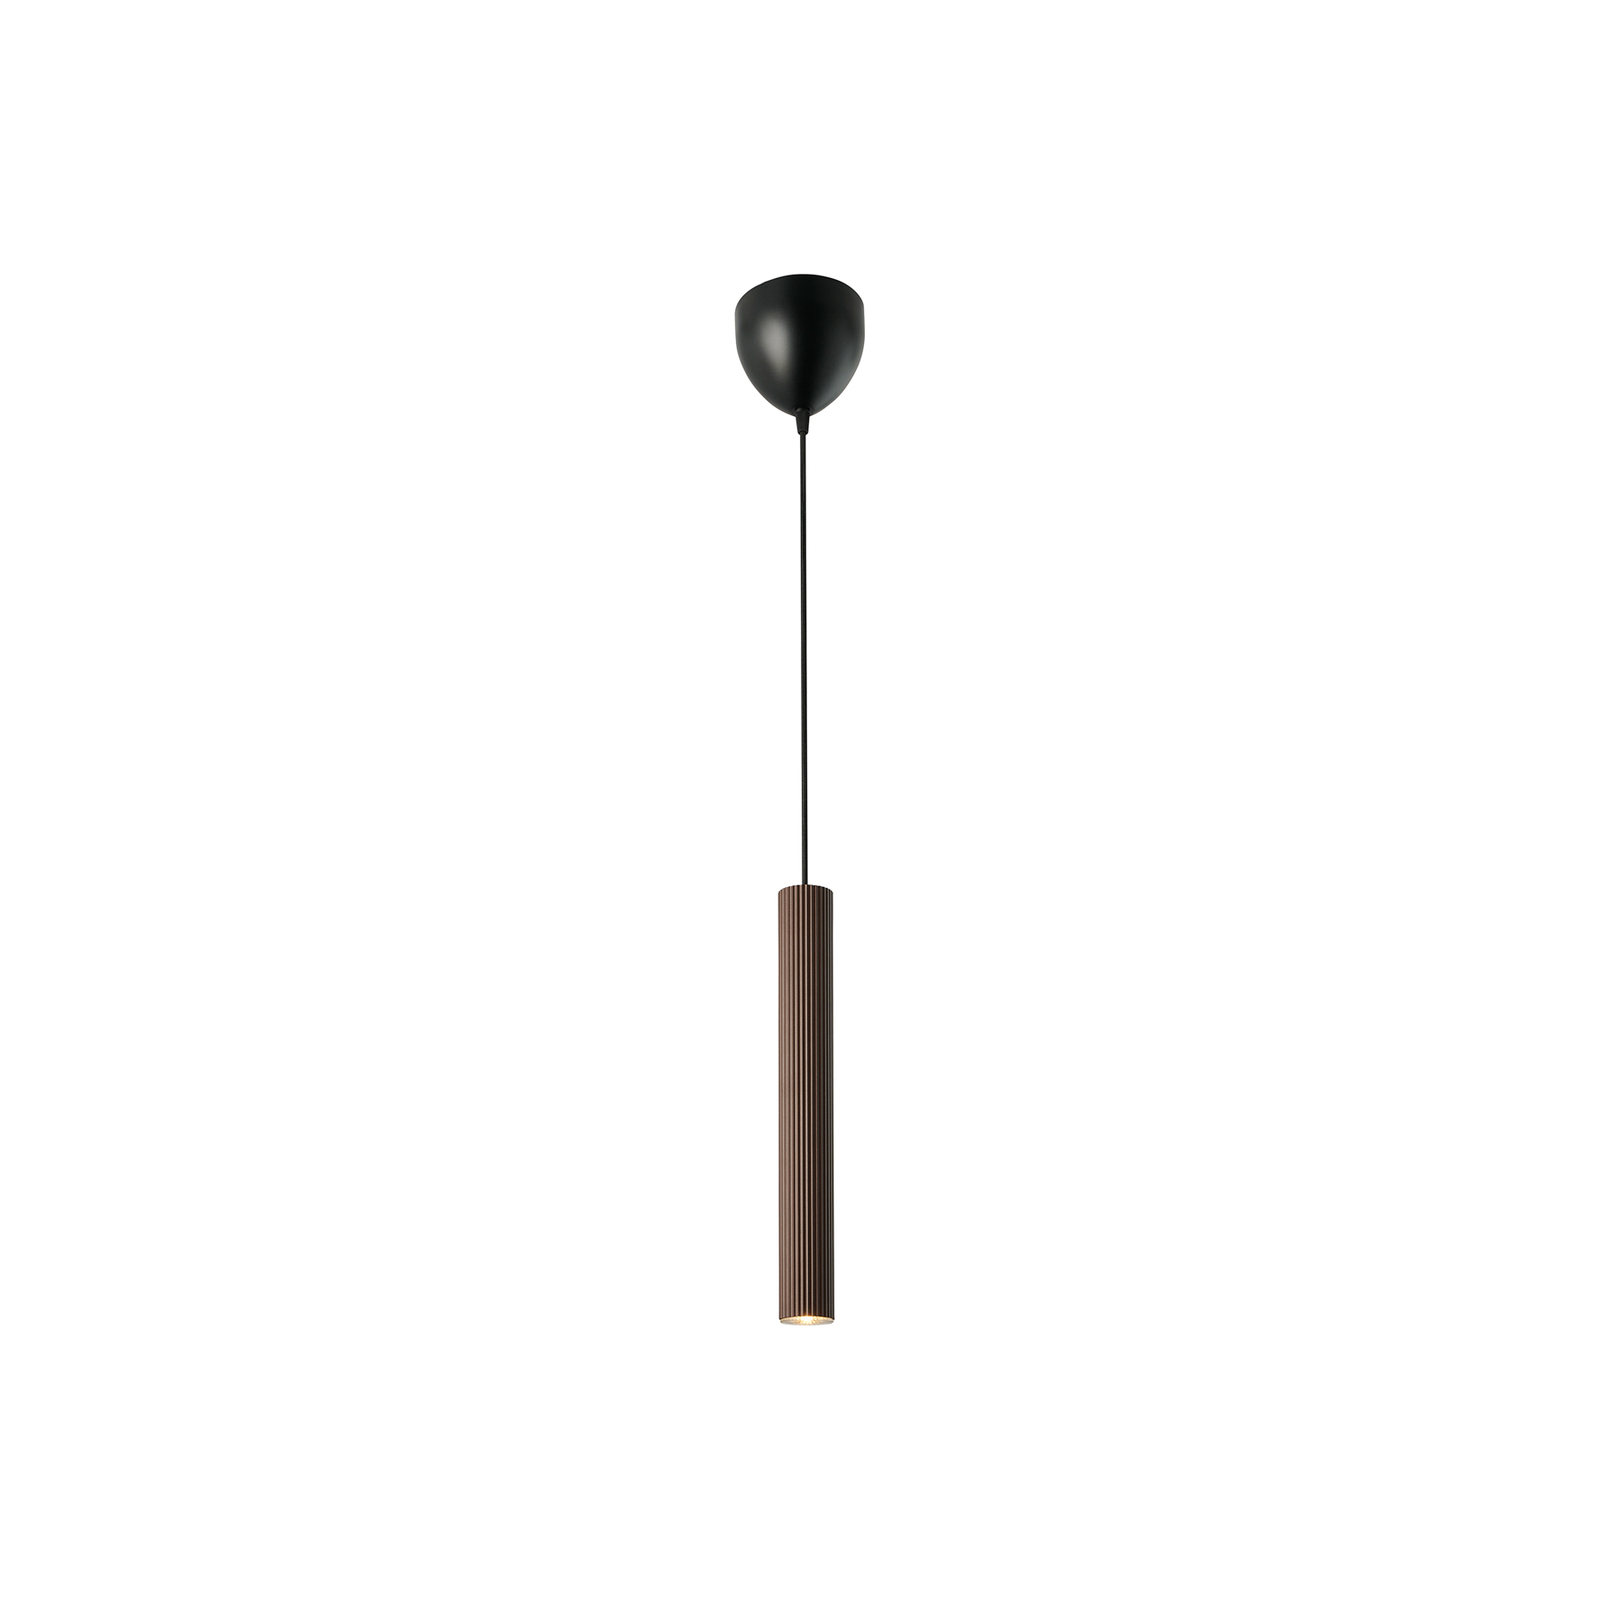 Hanglamp Vico, metalen kap, 1-lamp, bruin metallic